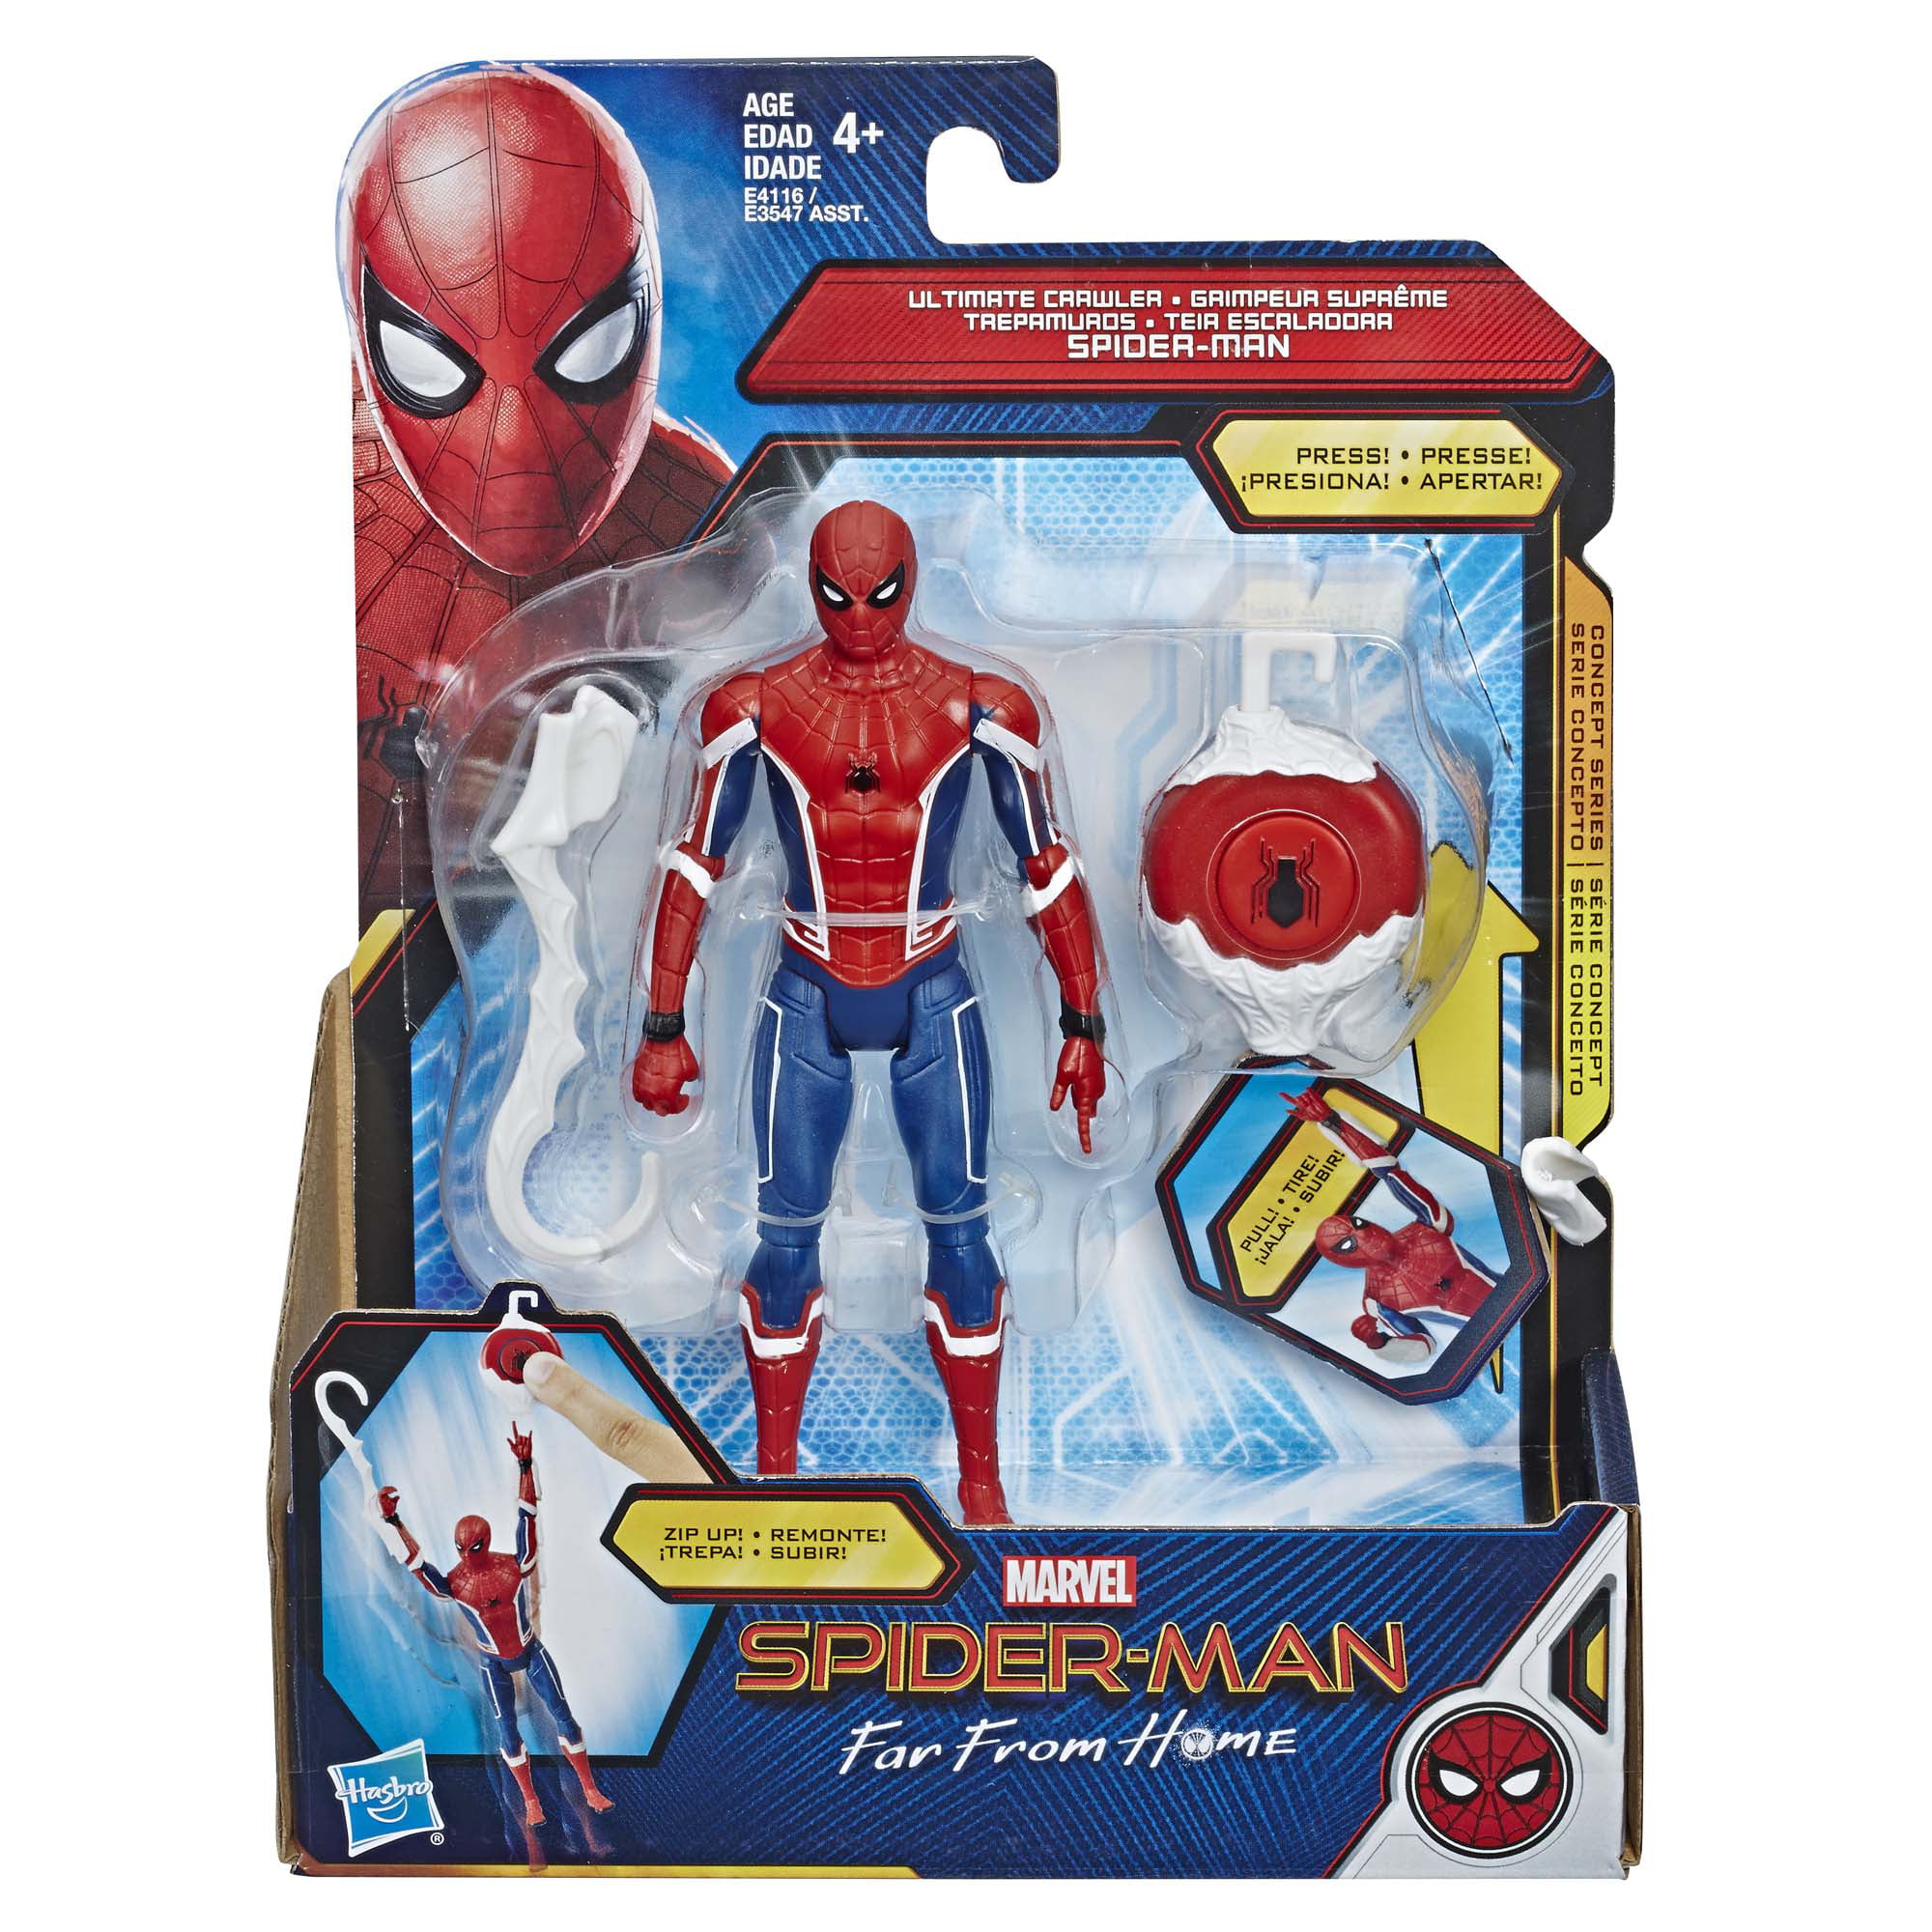 spiderman toys in walmart